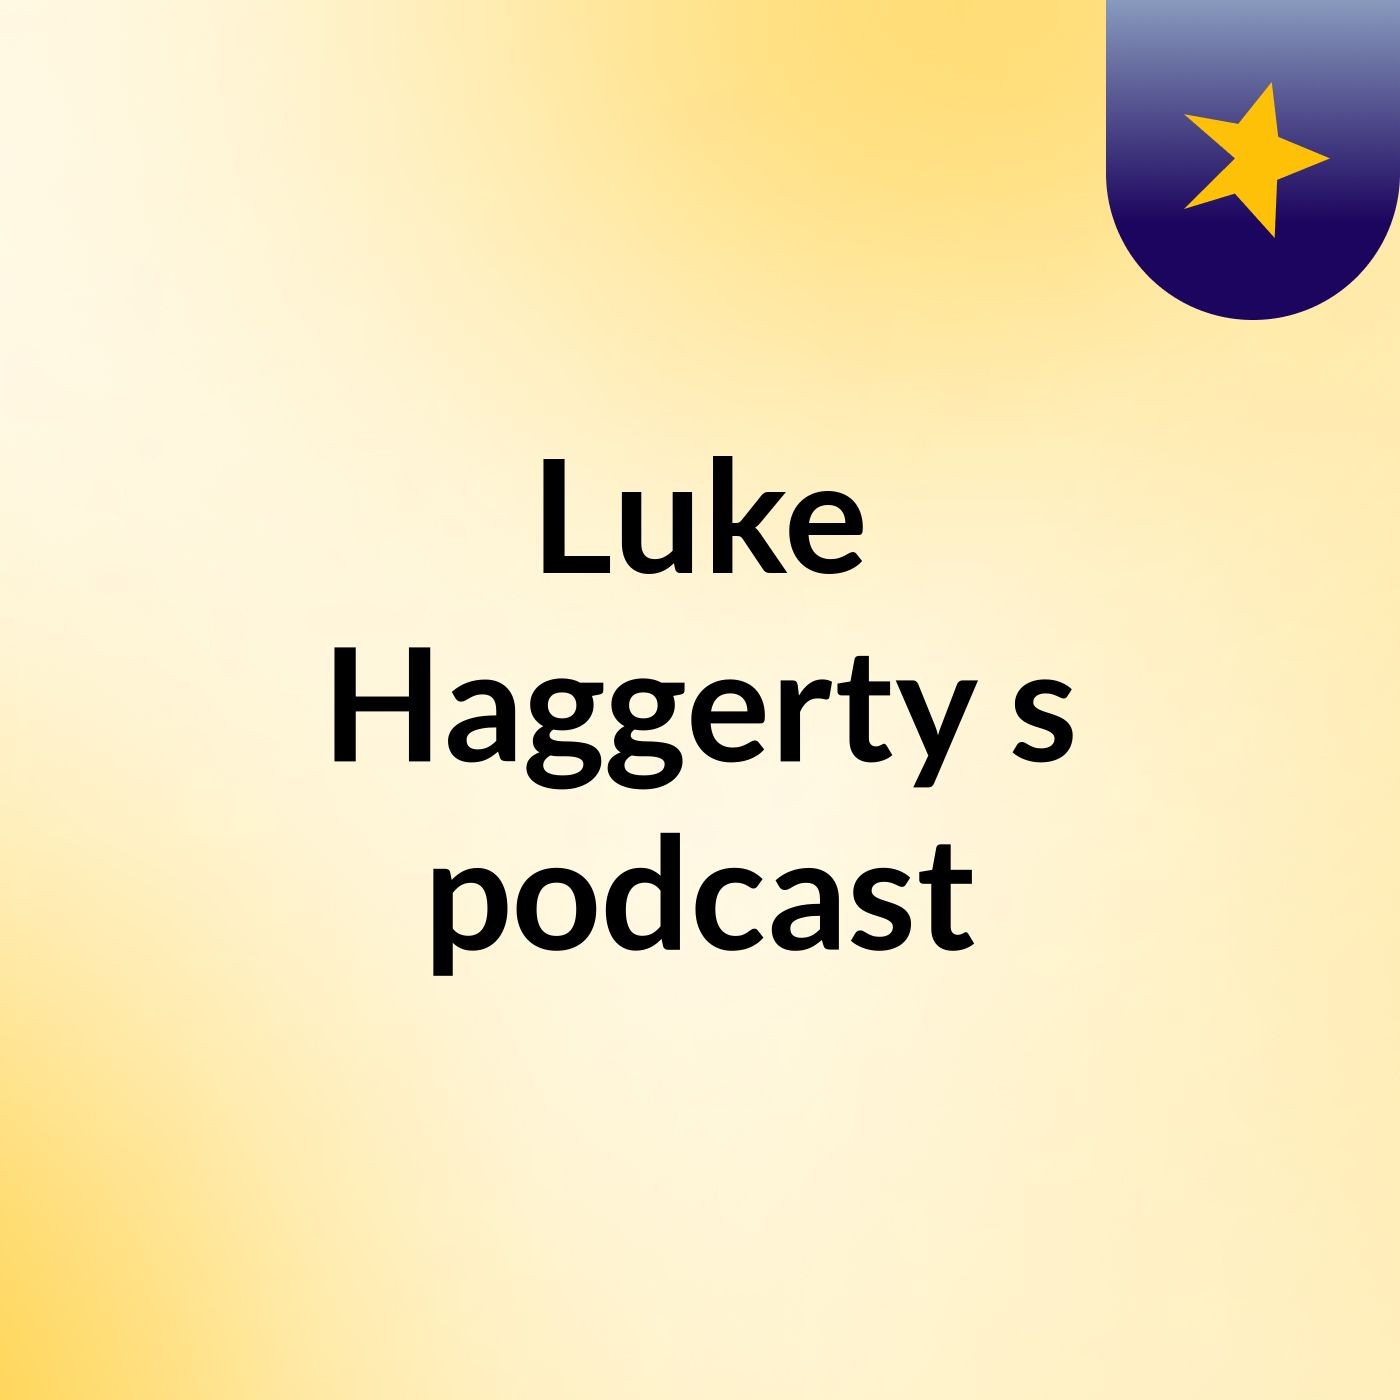 Episode 5 - Luke Haggerty's podcast